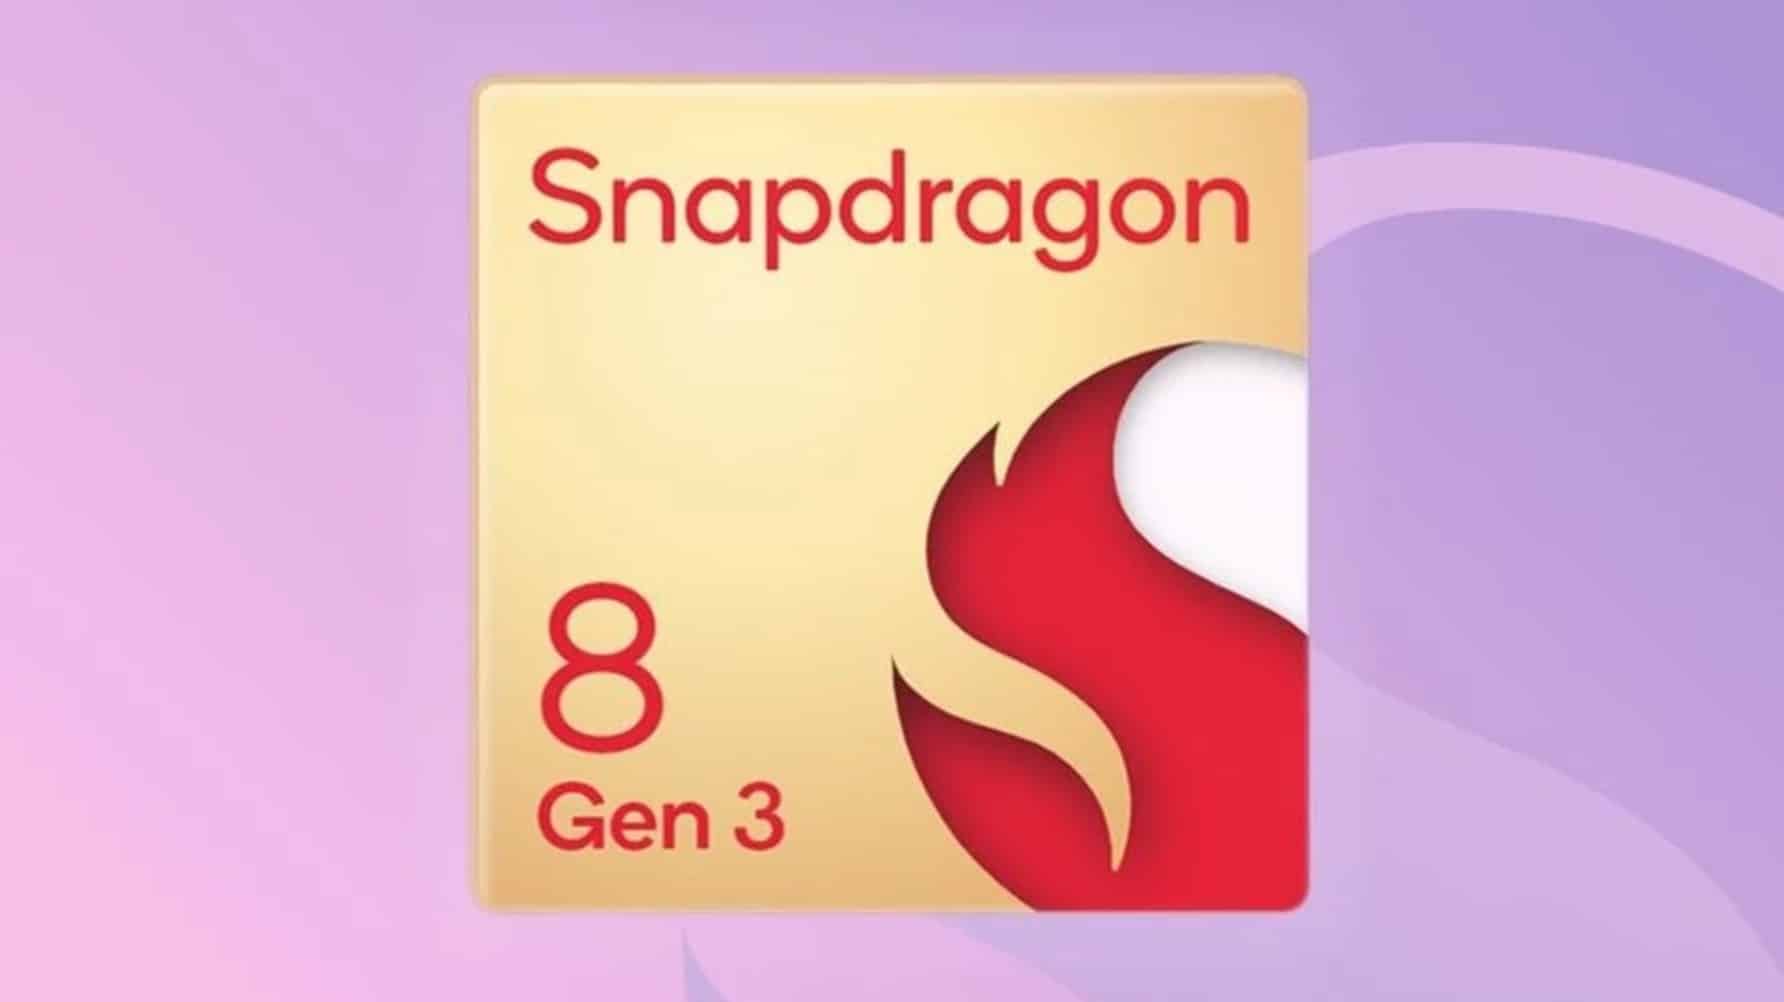 Snapdragon 8 Gen 3